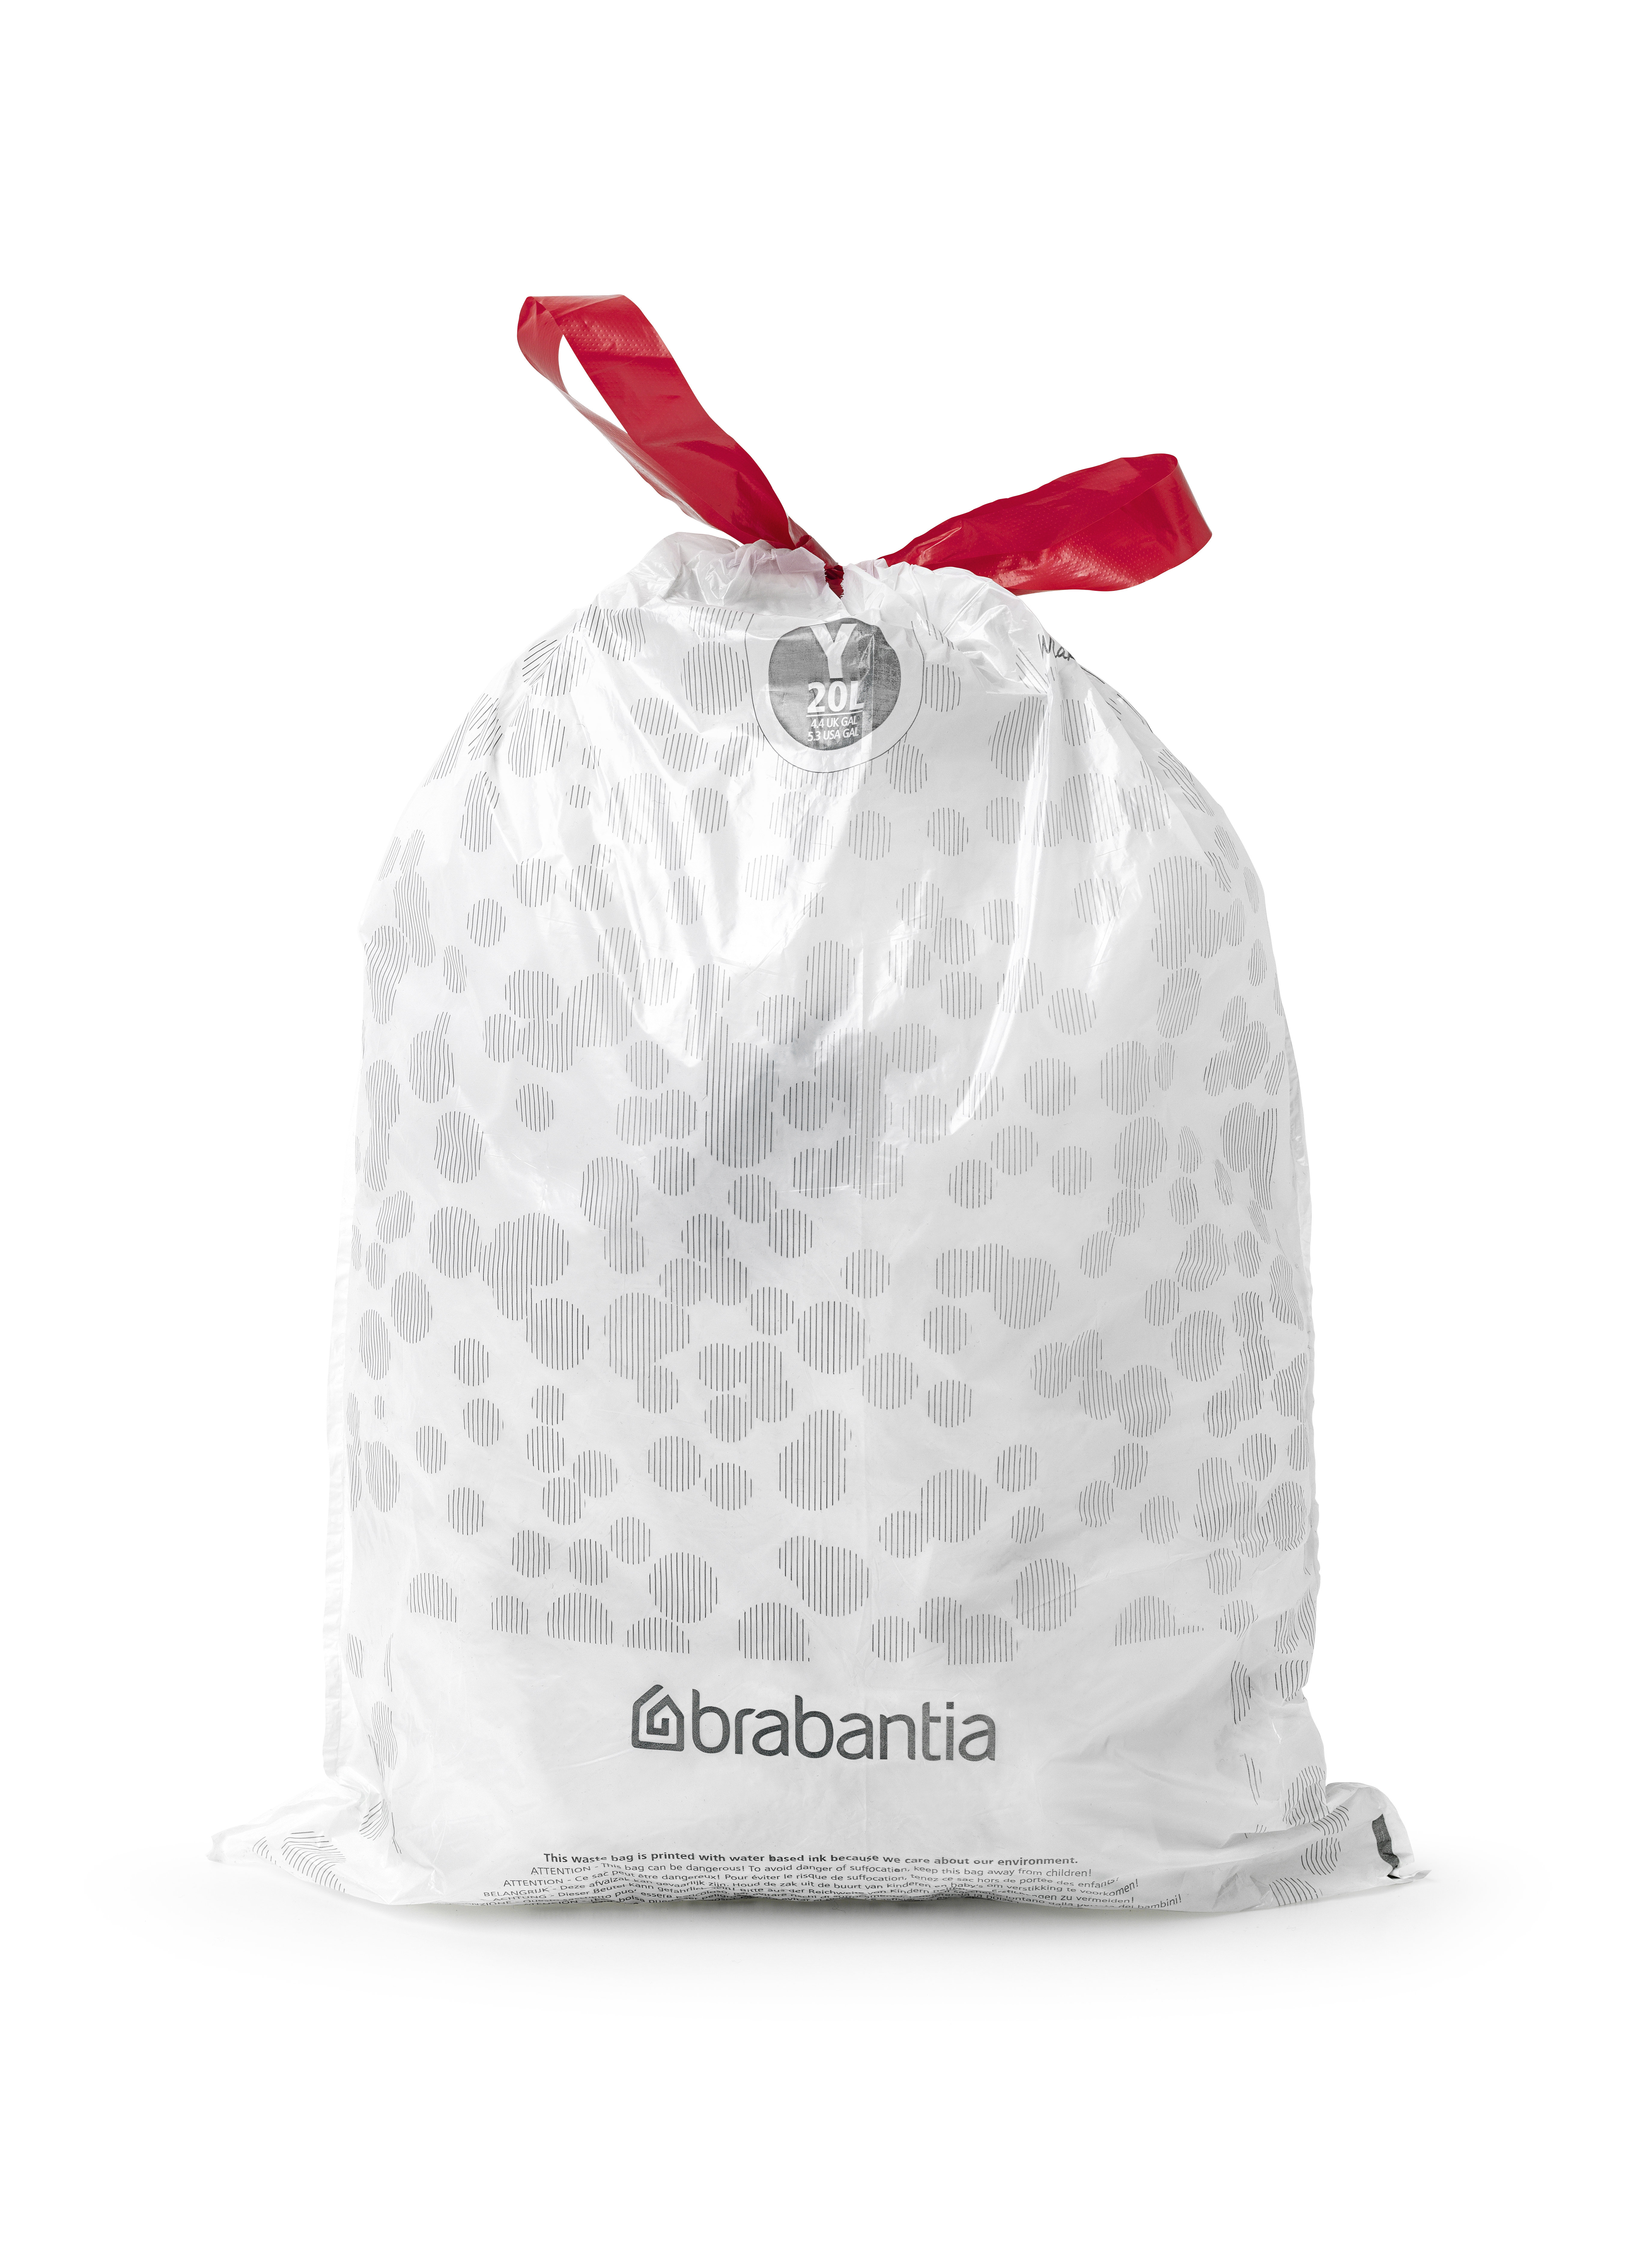 Brabantia 5.3 Gallons Plastic Trash Bags - 120 Count